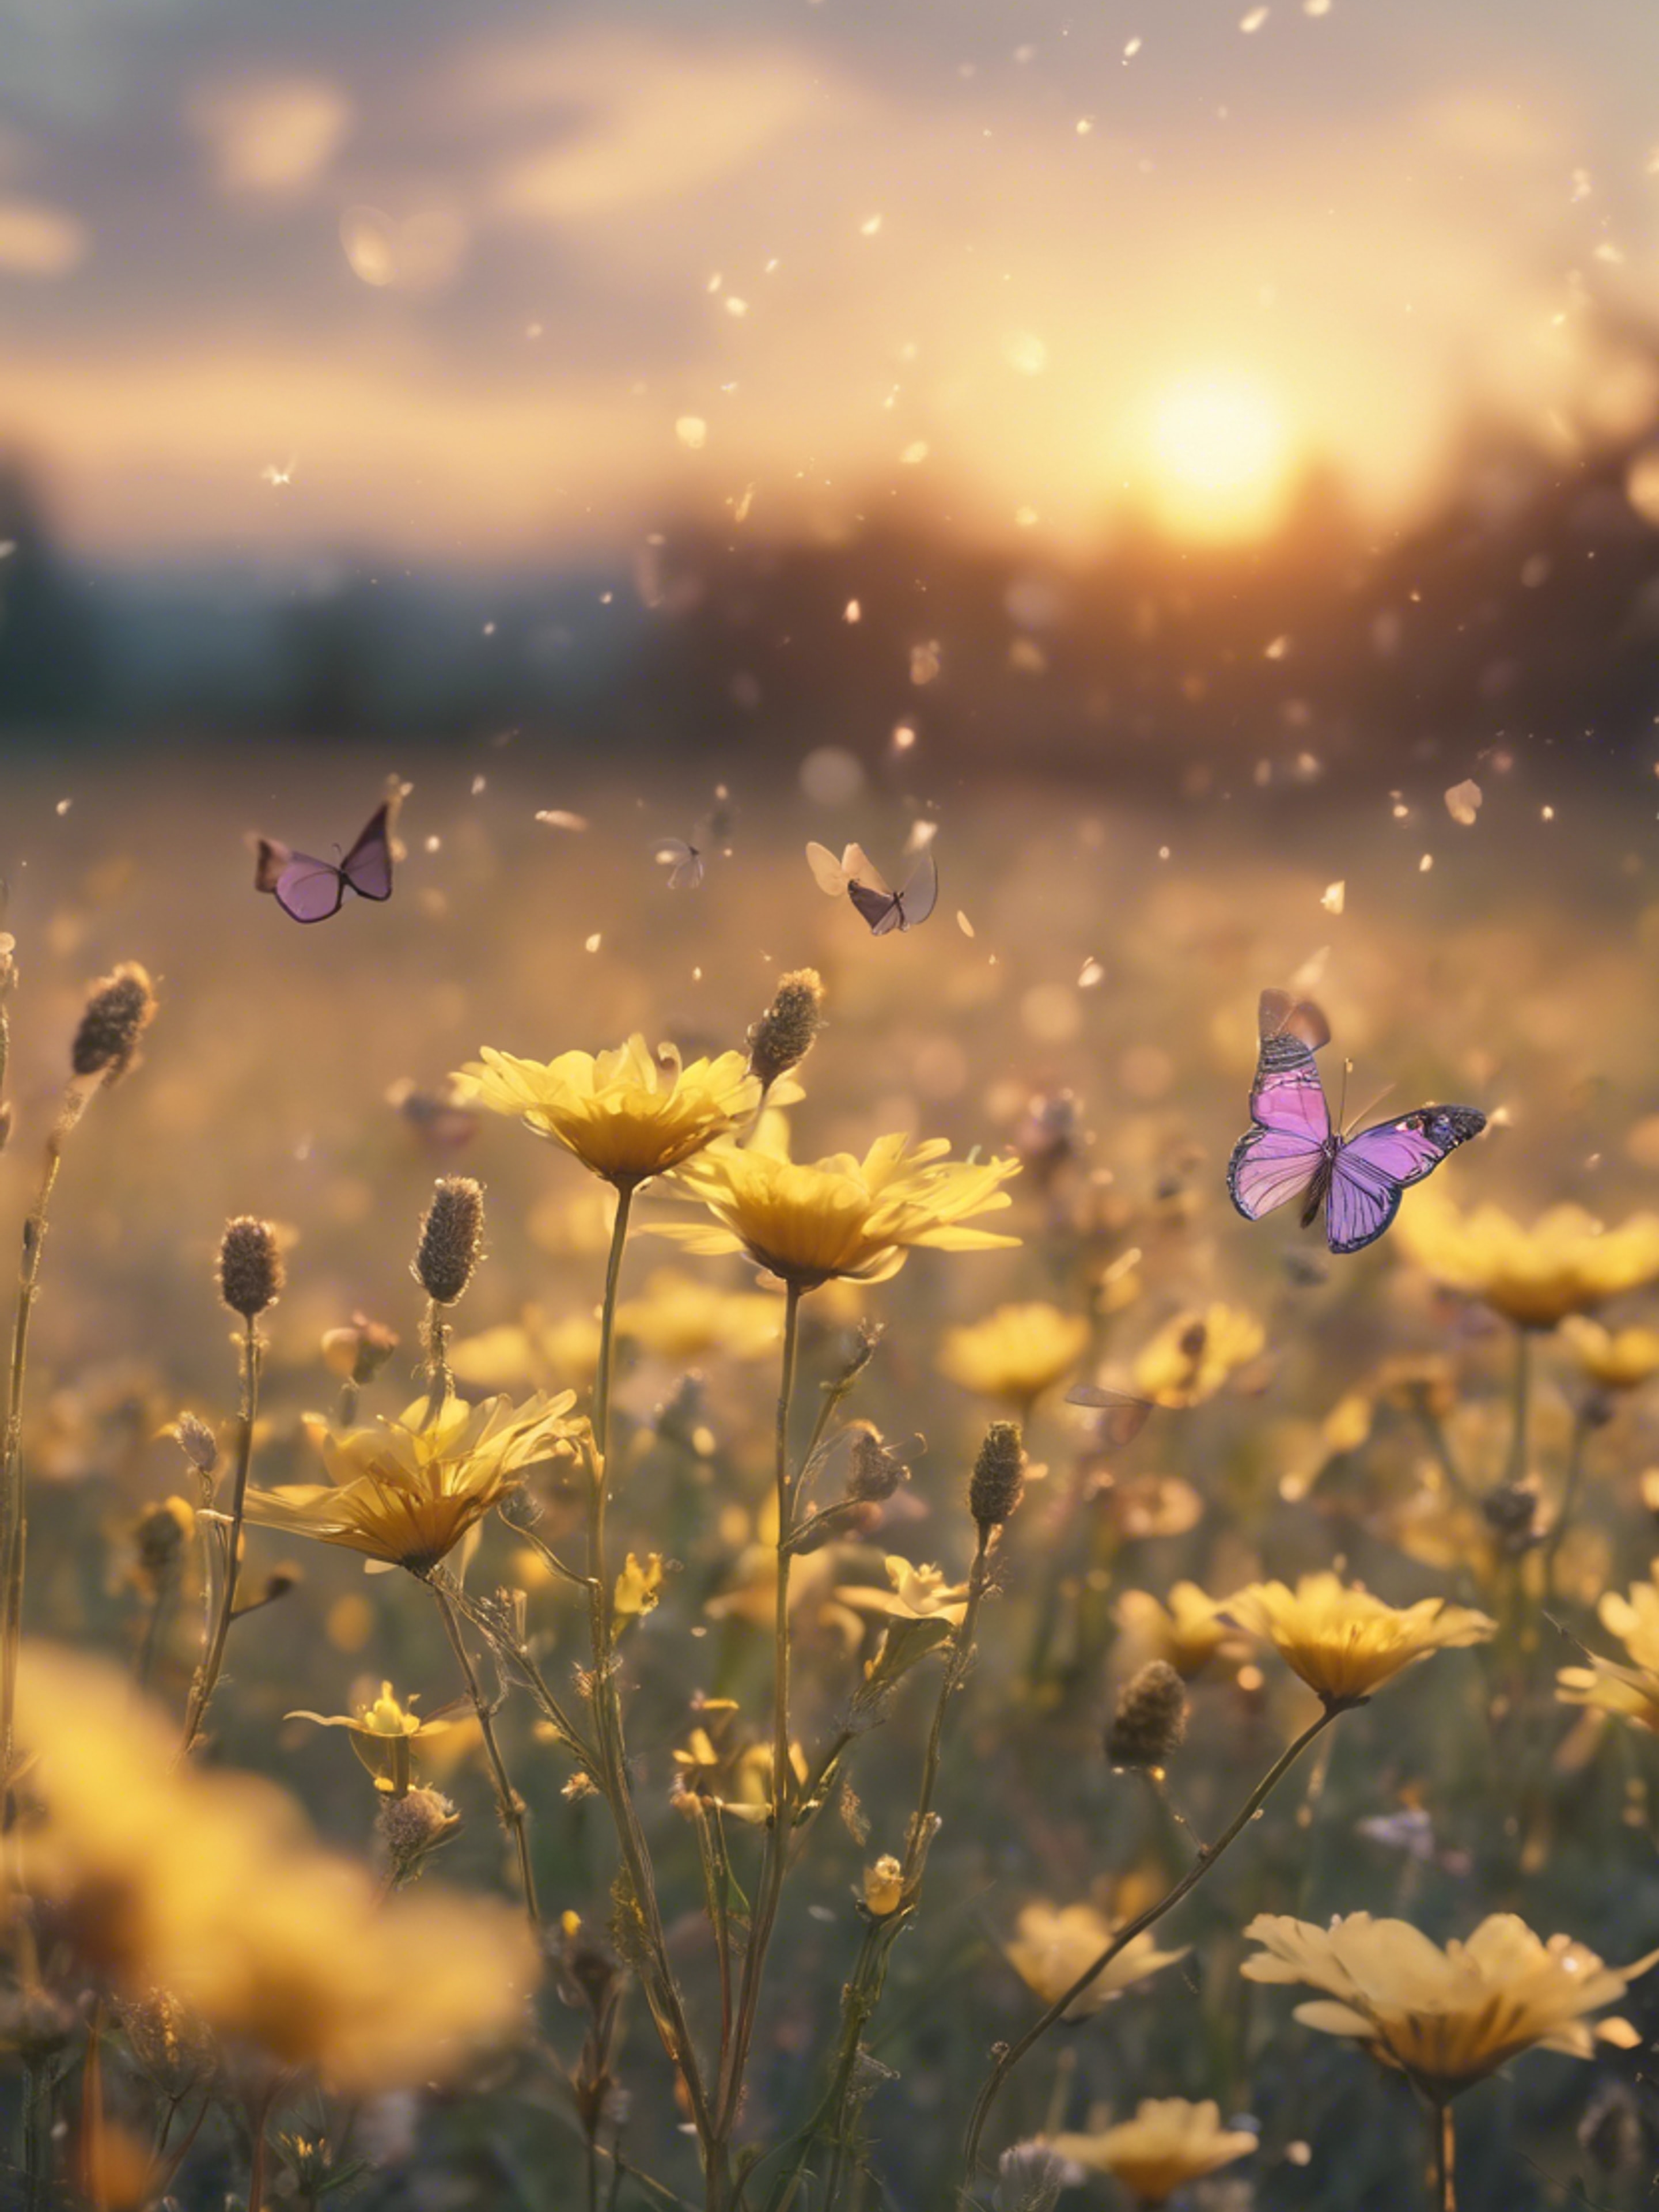 Sunset scene overlooking a meadow filled with pastel yellow flowers and kawaii butterflies fluttering above them. Papel de parede[4de922e1f50d428d8d1a]